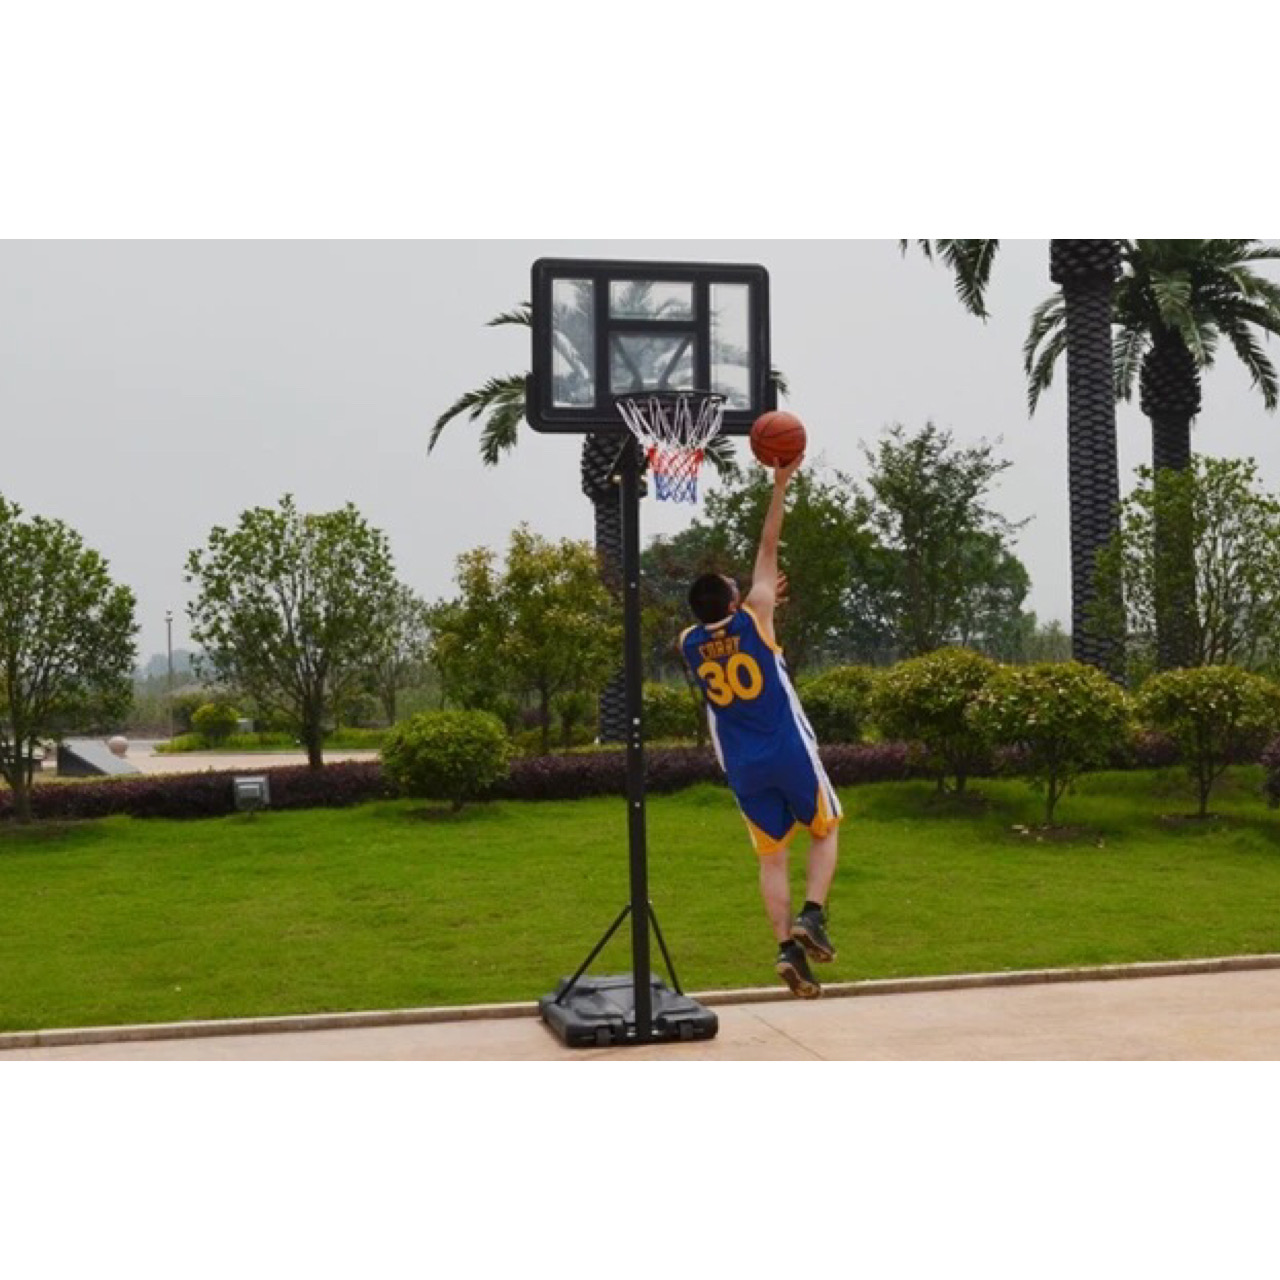 Basketball hoop stand